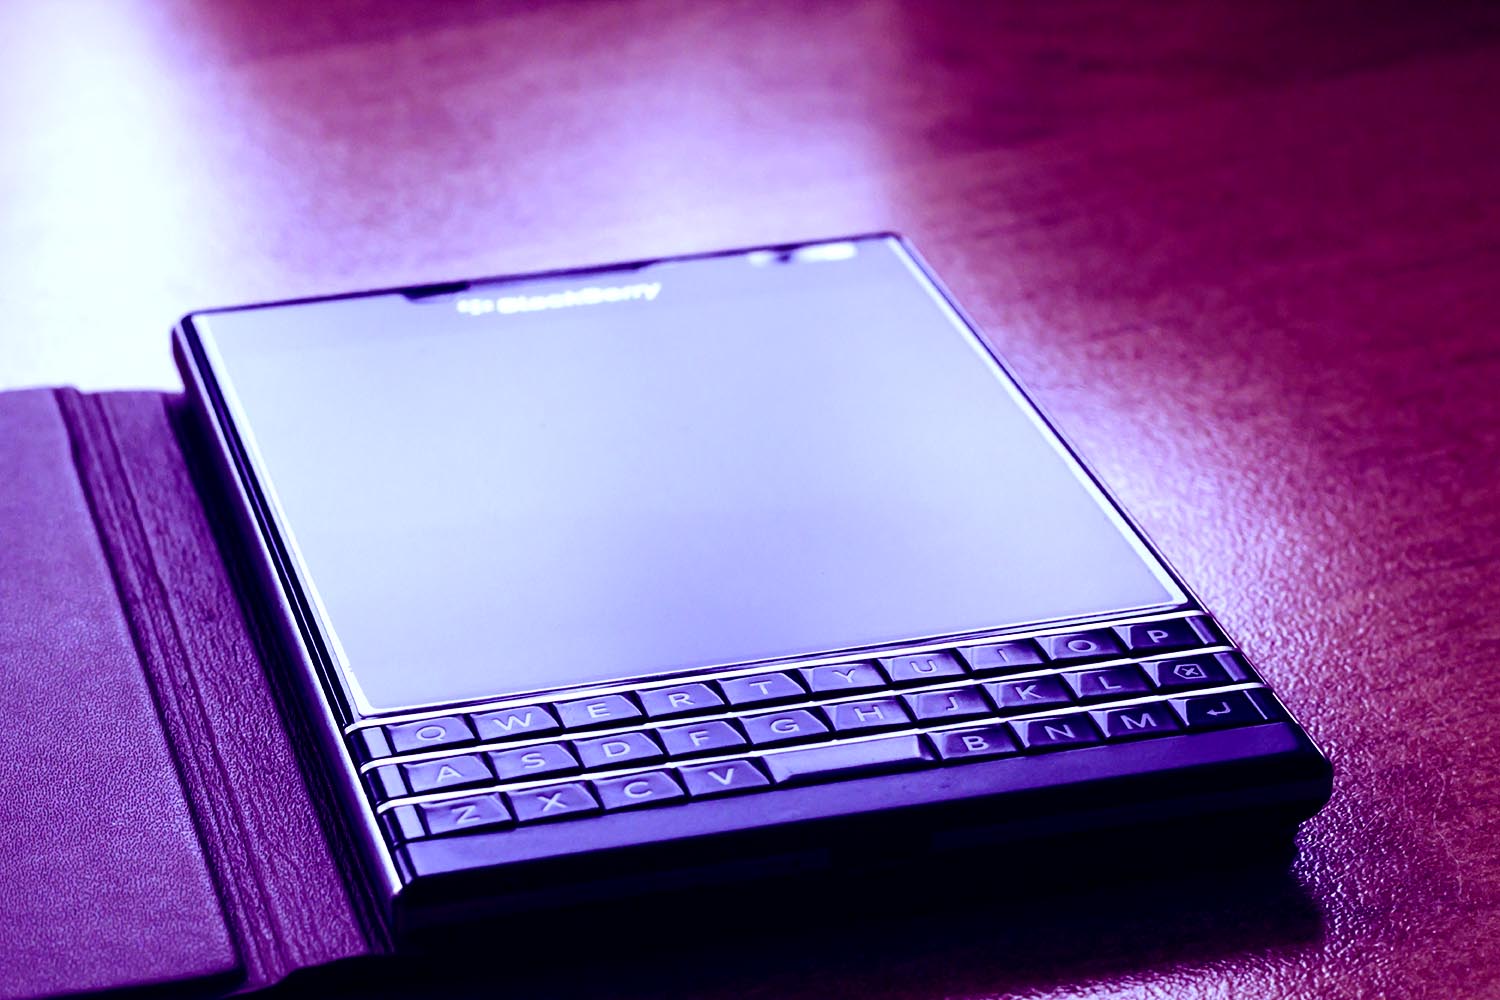 11. Blackberry phone 1